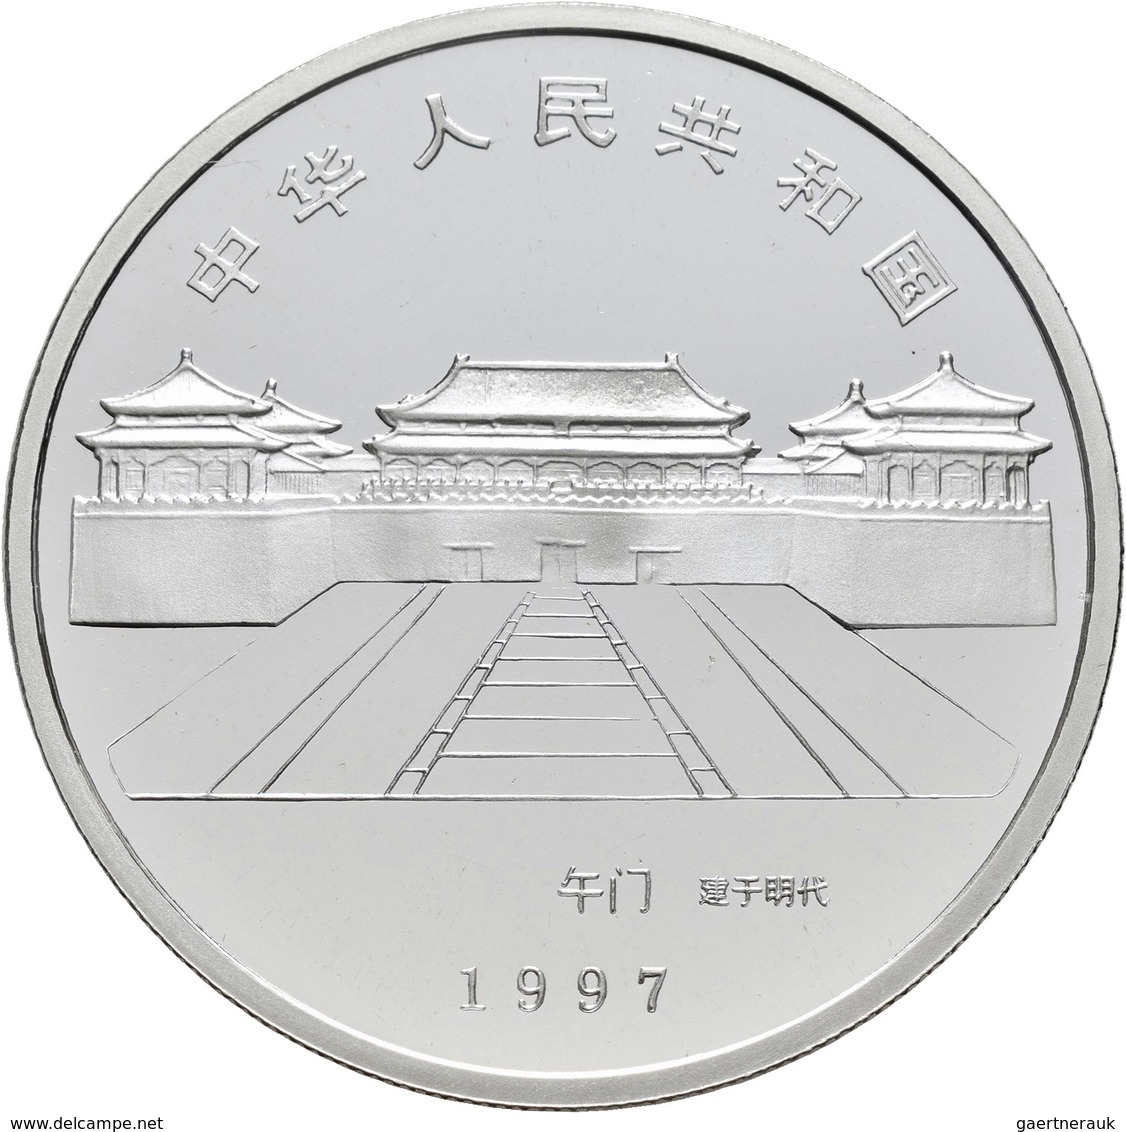 China - Volksrepublik: Lot 5 X 10 Yuan 1997, Serie Verbotene Stadt / Palastmuseum Beijing: Palast De - China